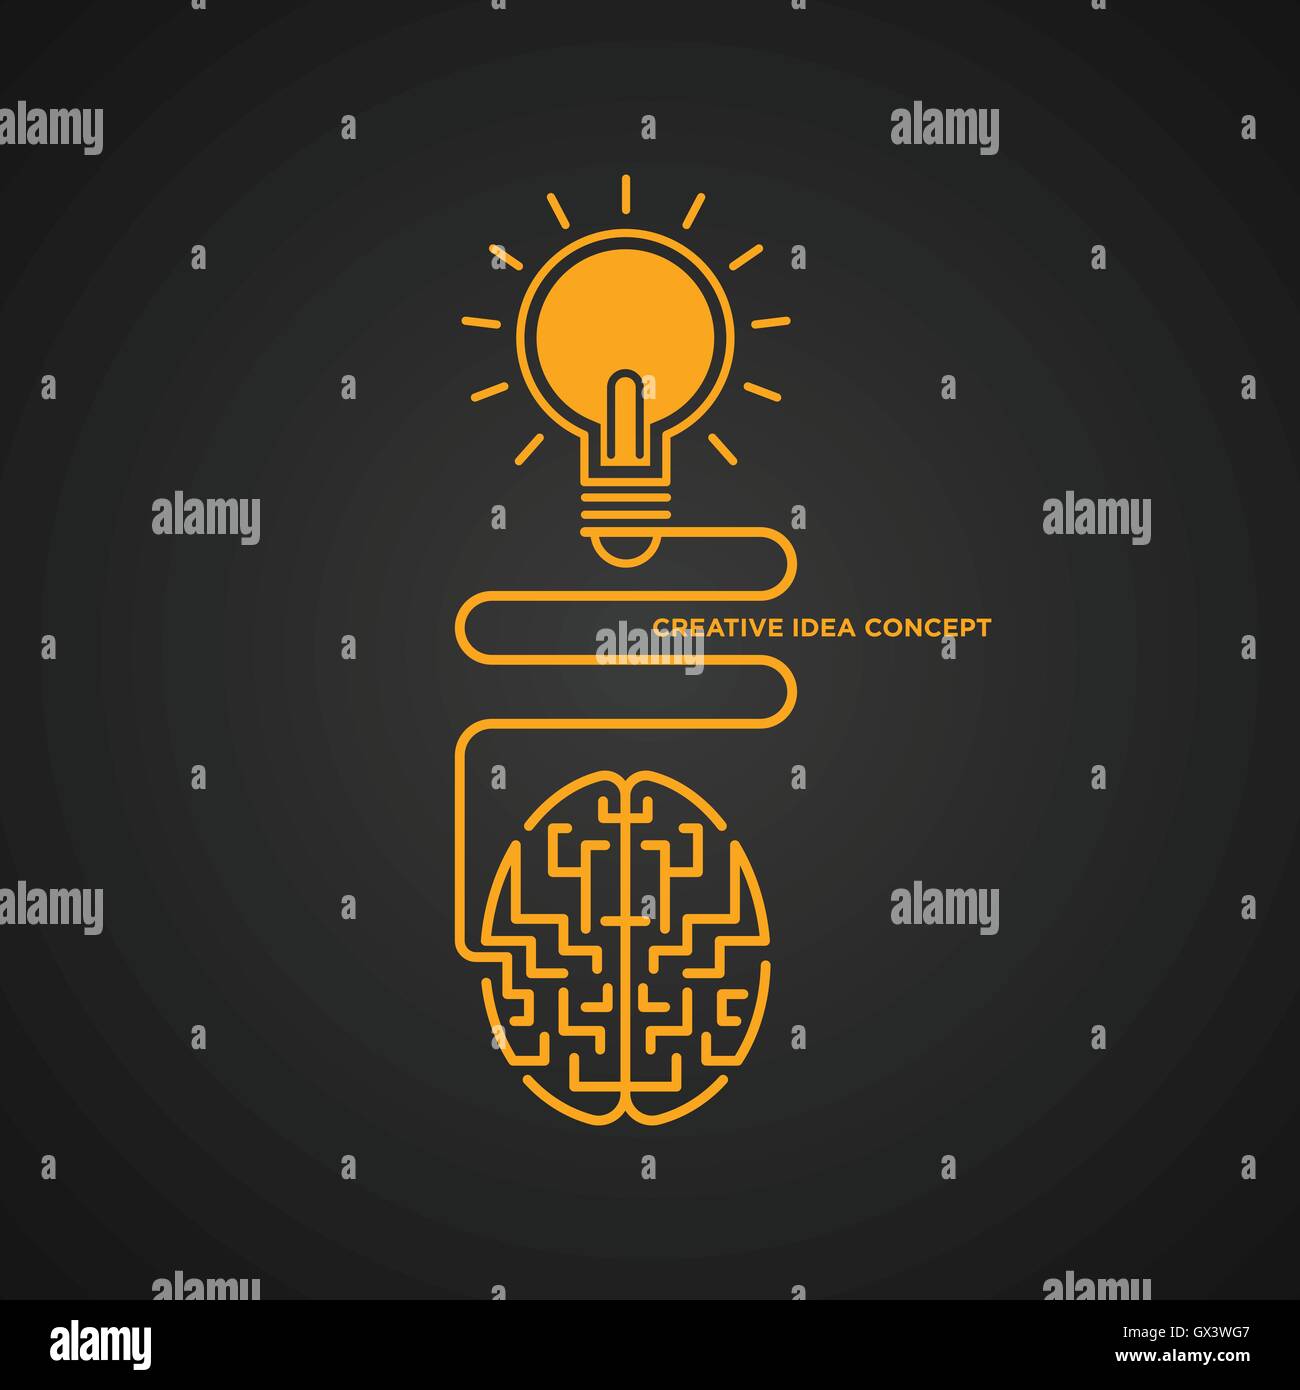 Kreative Idee Konzept, Brainstorm-Glühbirne-Vektor-illustration Stock Vektor